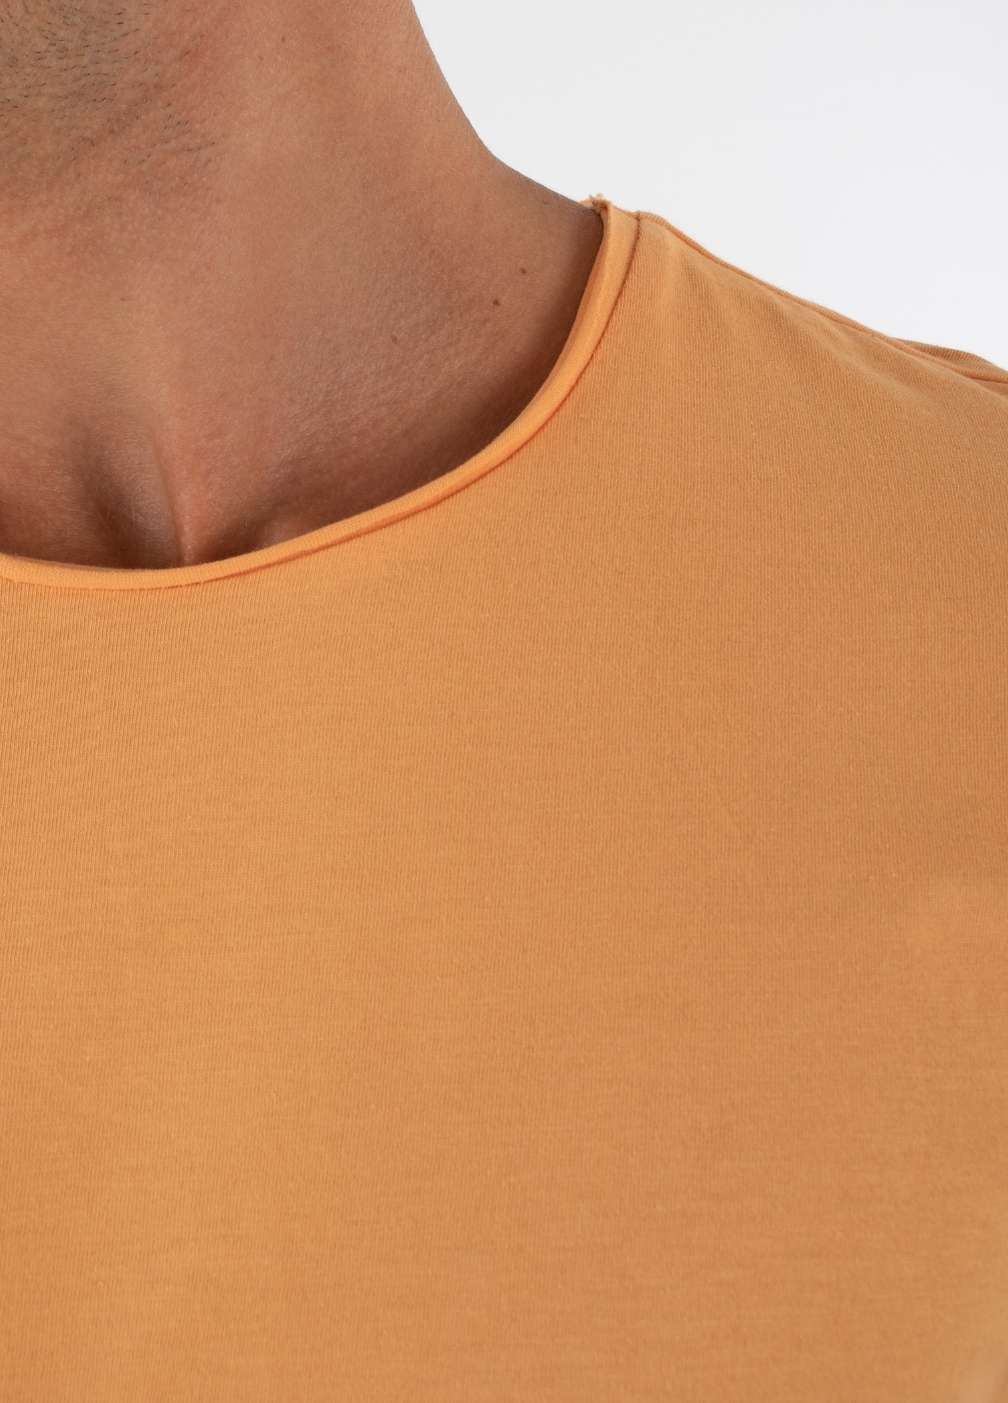 GOLD EARTH T-SHIRT PURE closeup - image of shirt collar - 100% organic cotton t shirts